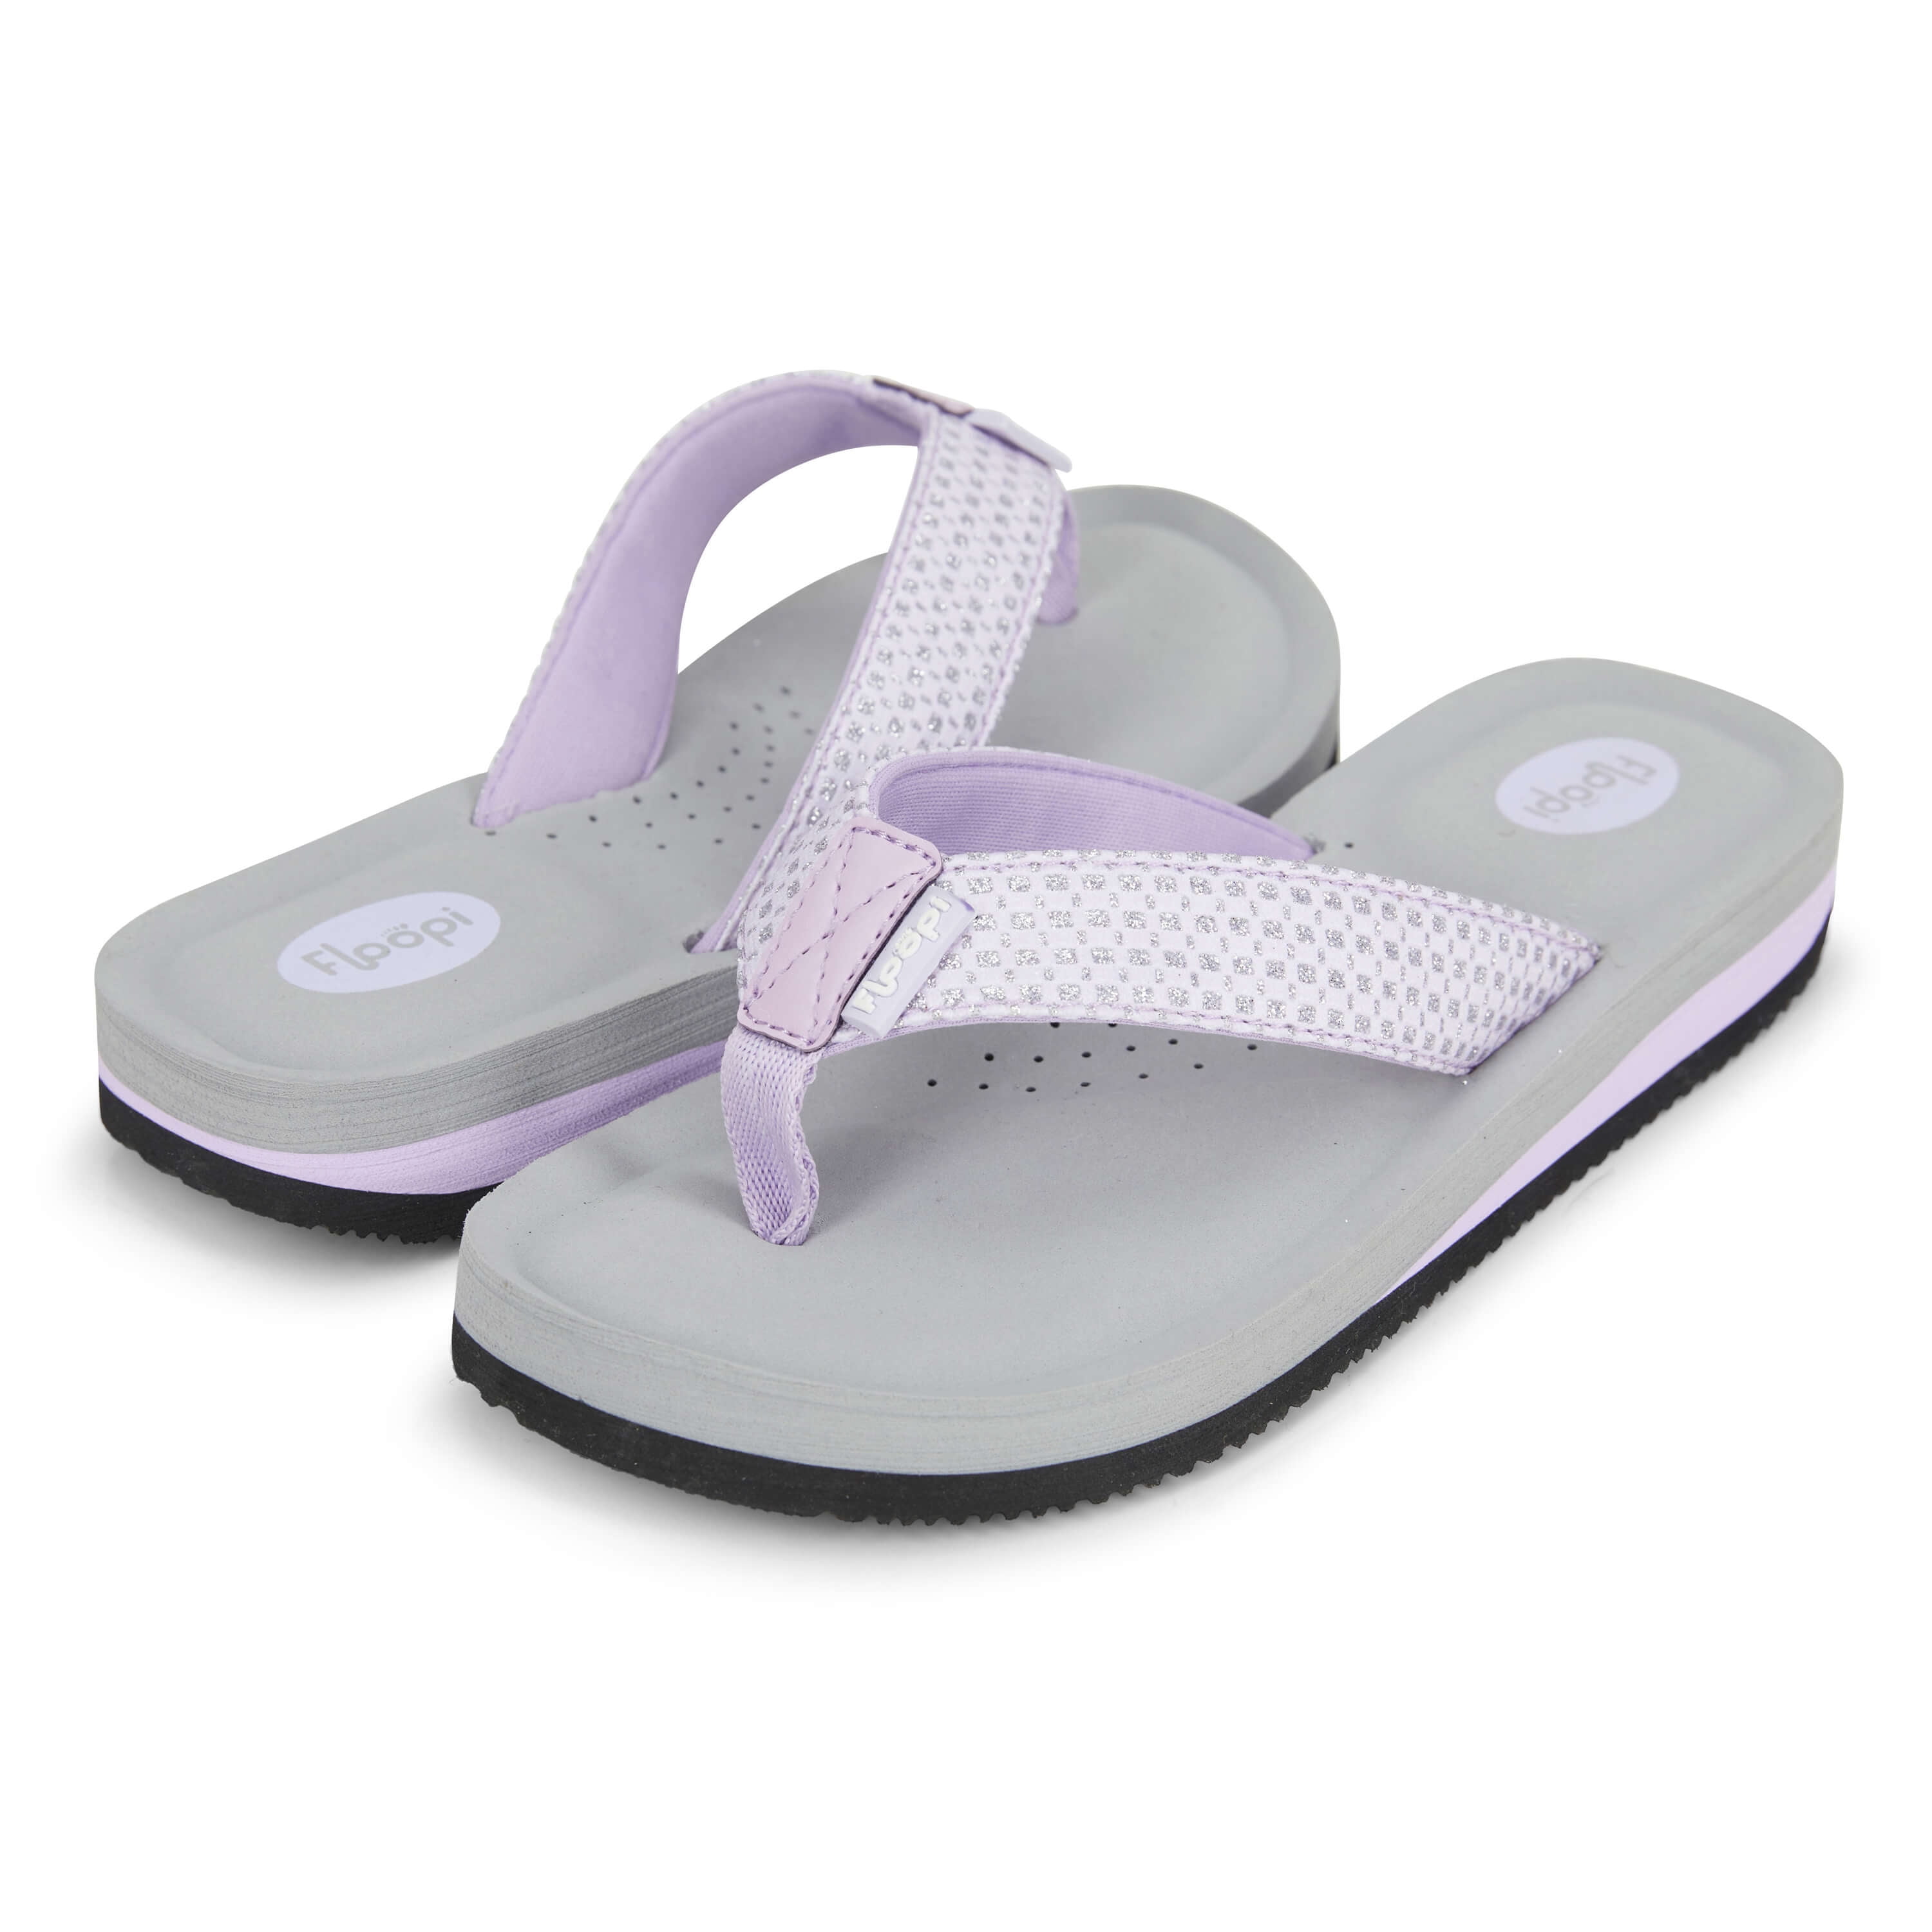 Floopi Women's Sparkly Flip Flops Comfort Beach Sandals W/Arch Support ...